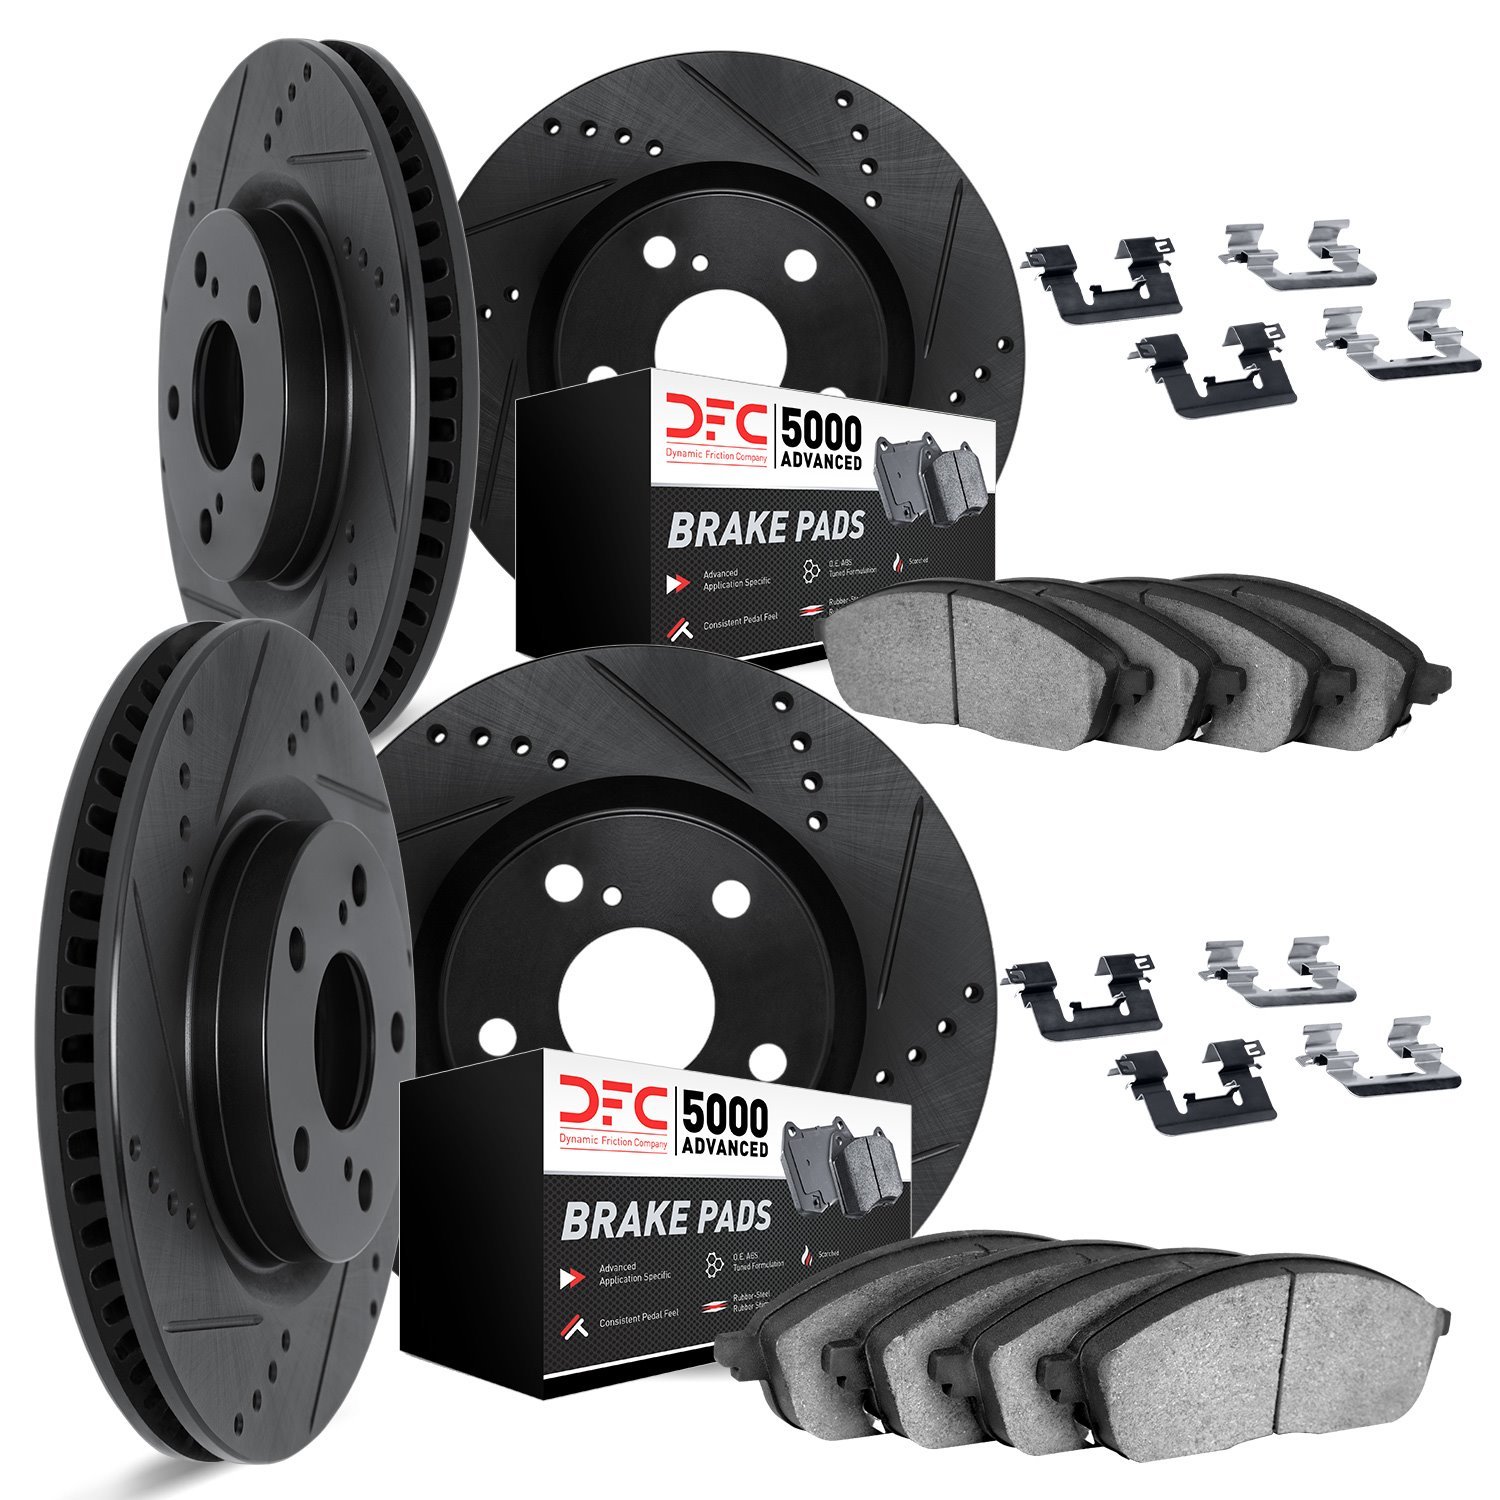 8514-67079 Drilled/Slotted Brake Rotors w/5000 Advanced Brake Pads Kit & Hardware [Black], Fits Select Multiple Makes/Models, Po